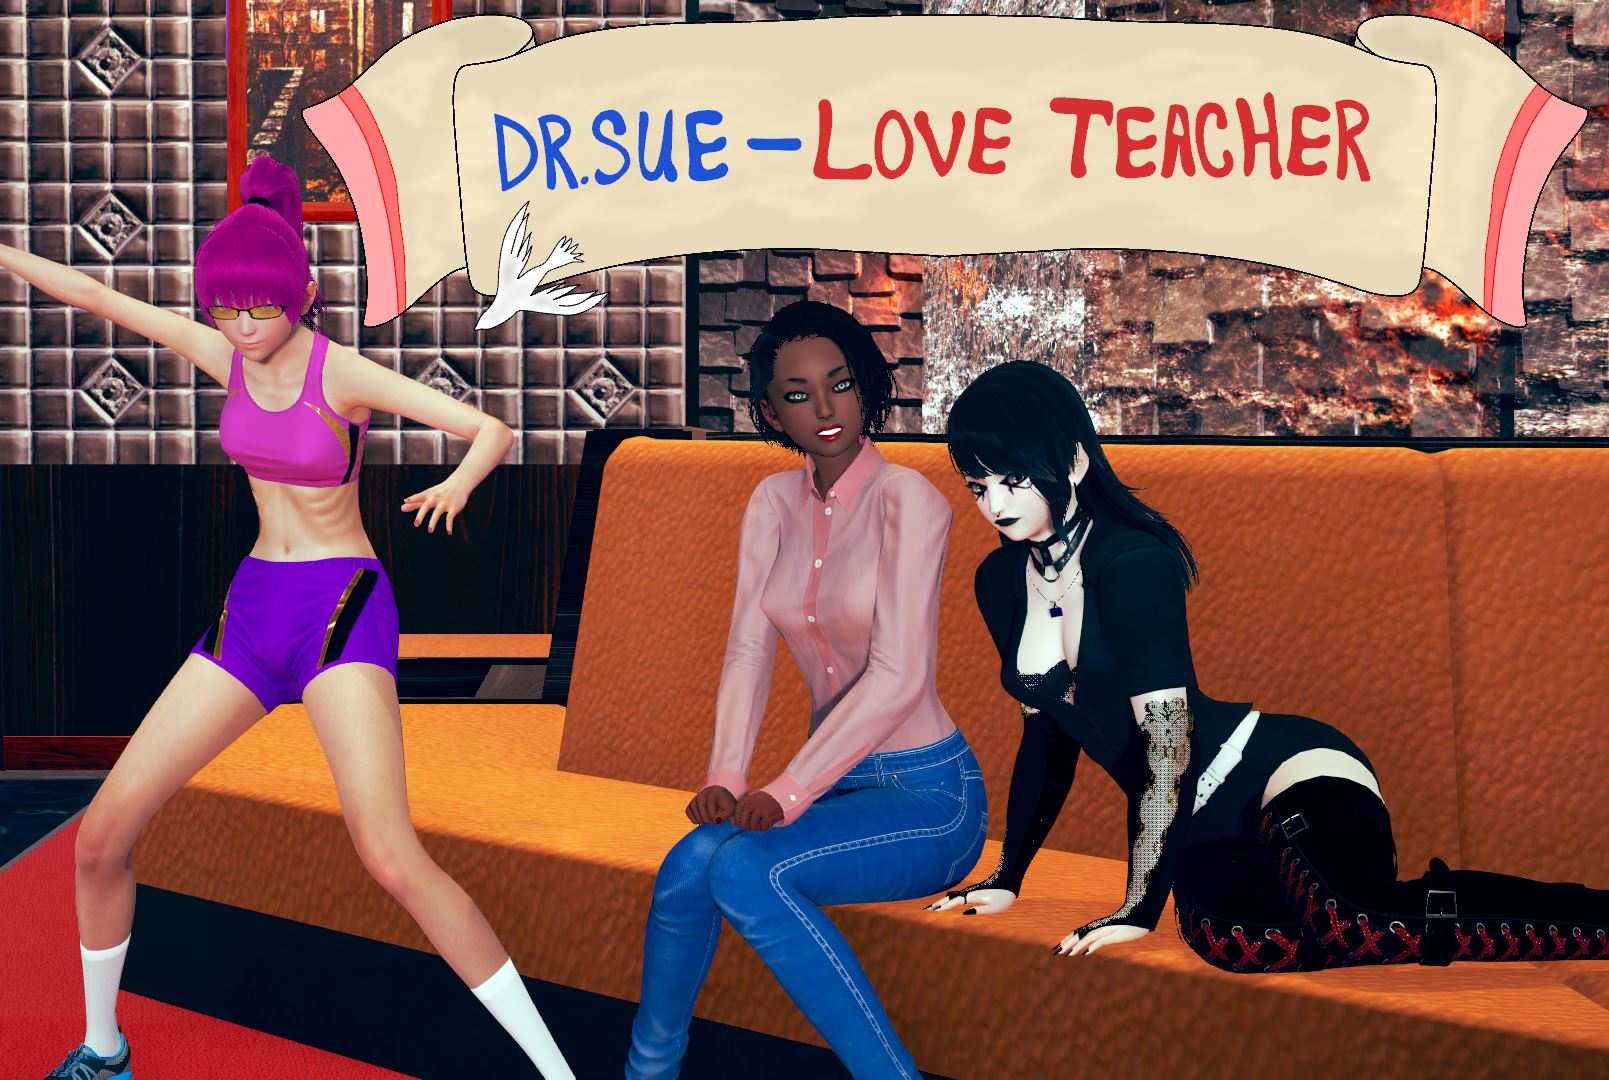 Tichar Sexy Daunlod - Dr. Sue Love Teacher Ren'Py Porn Sex Game v.1.0 Download for Windows, Linux